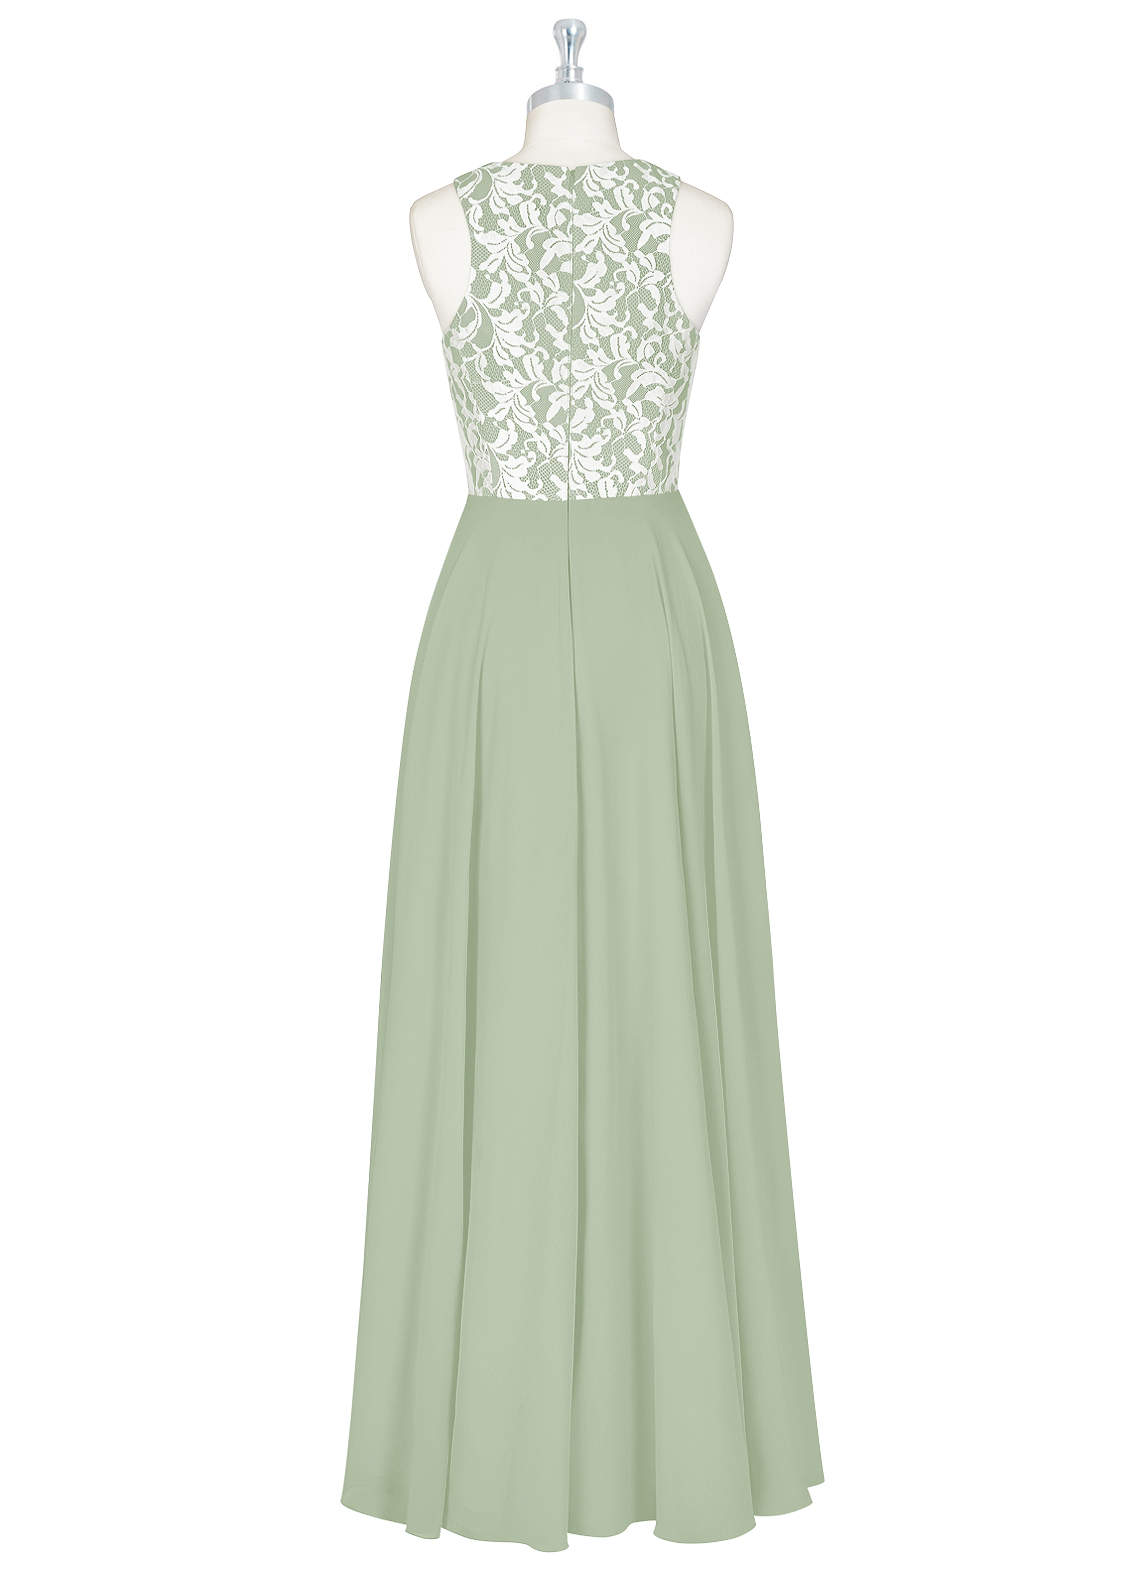 Azazie Kate Bridesmaid Dresses A-Line Lace Chiffon Floor-Length Dress image1